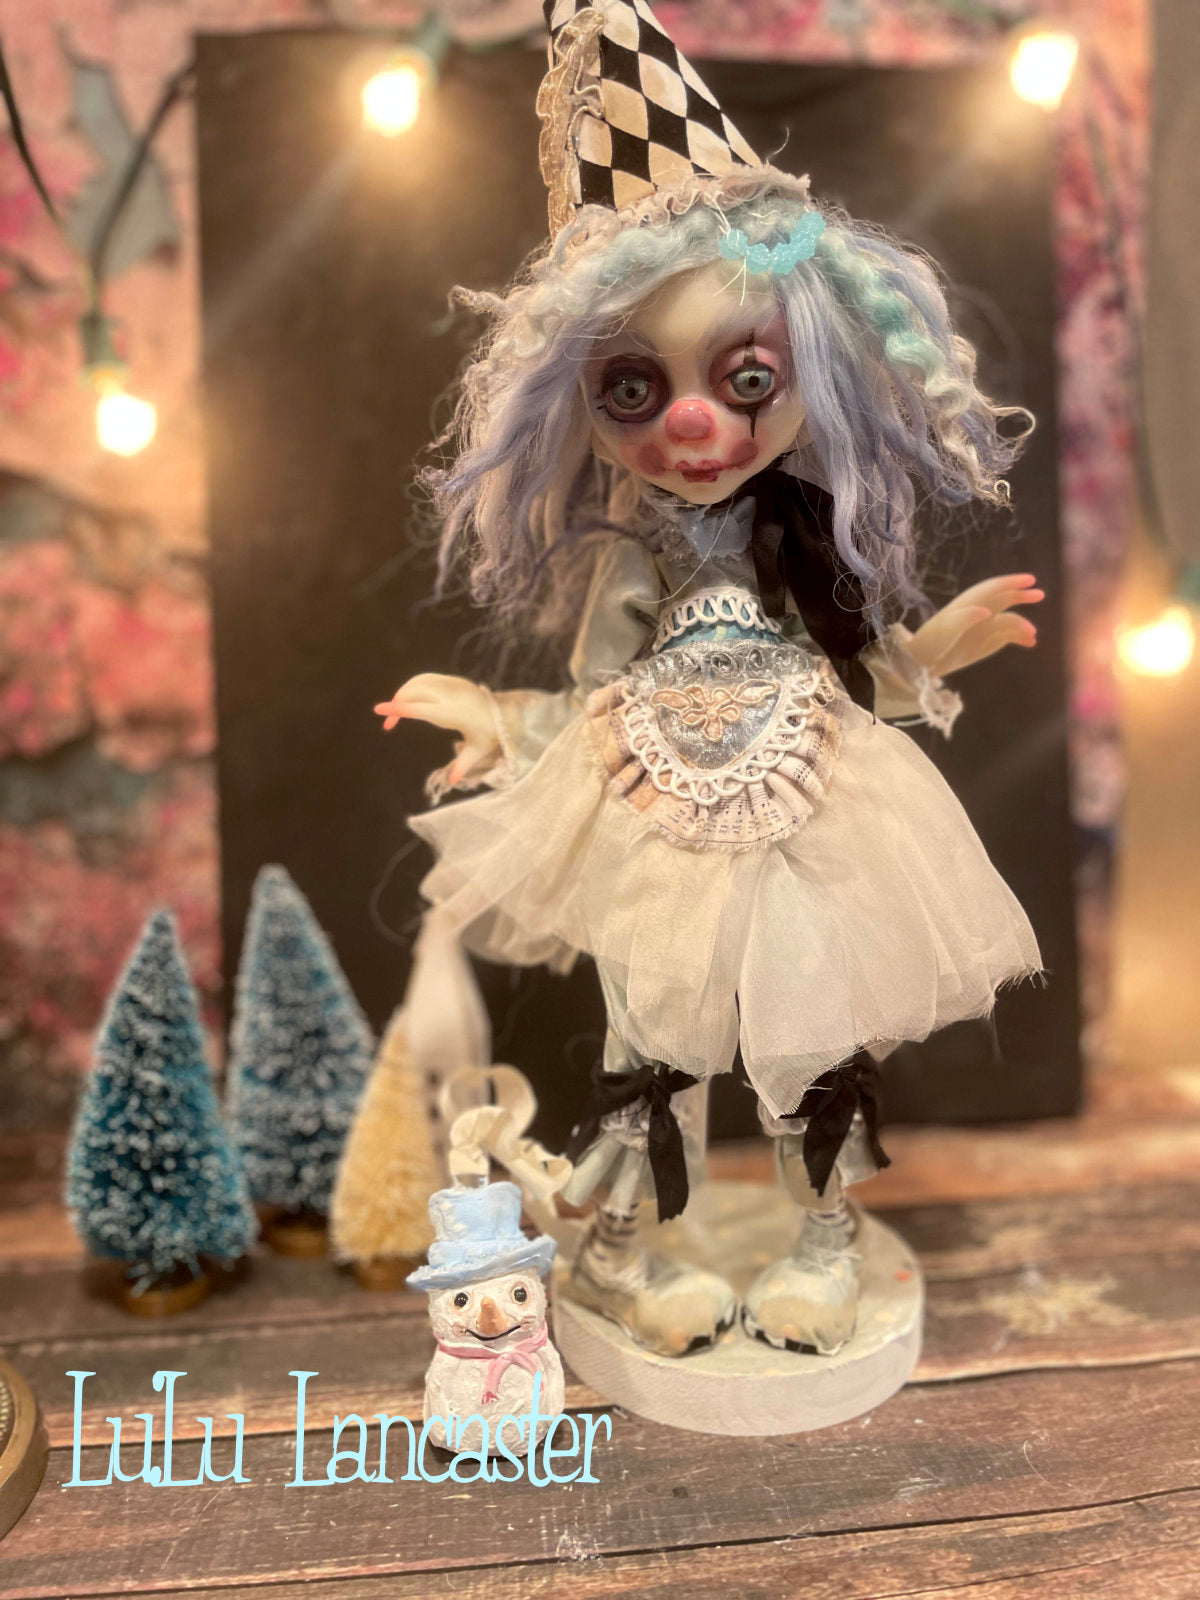 Silence Poupee the winter clown LuLu's Holiday Original LuLu Lancaster Art Doll